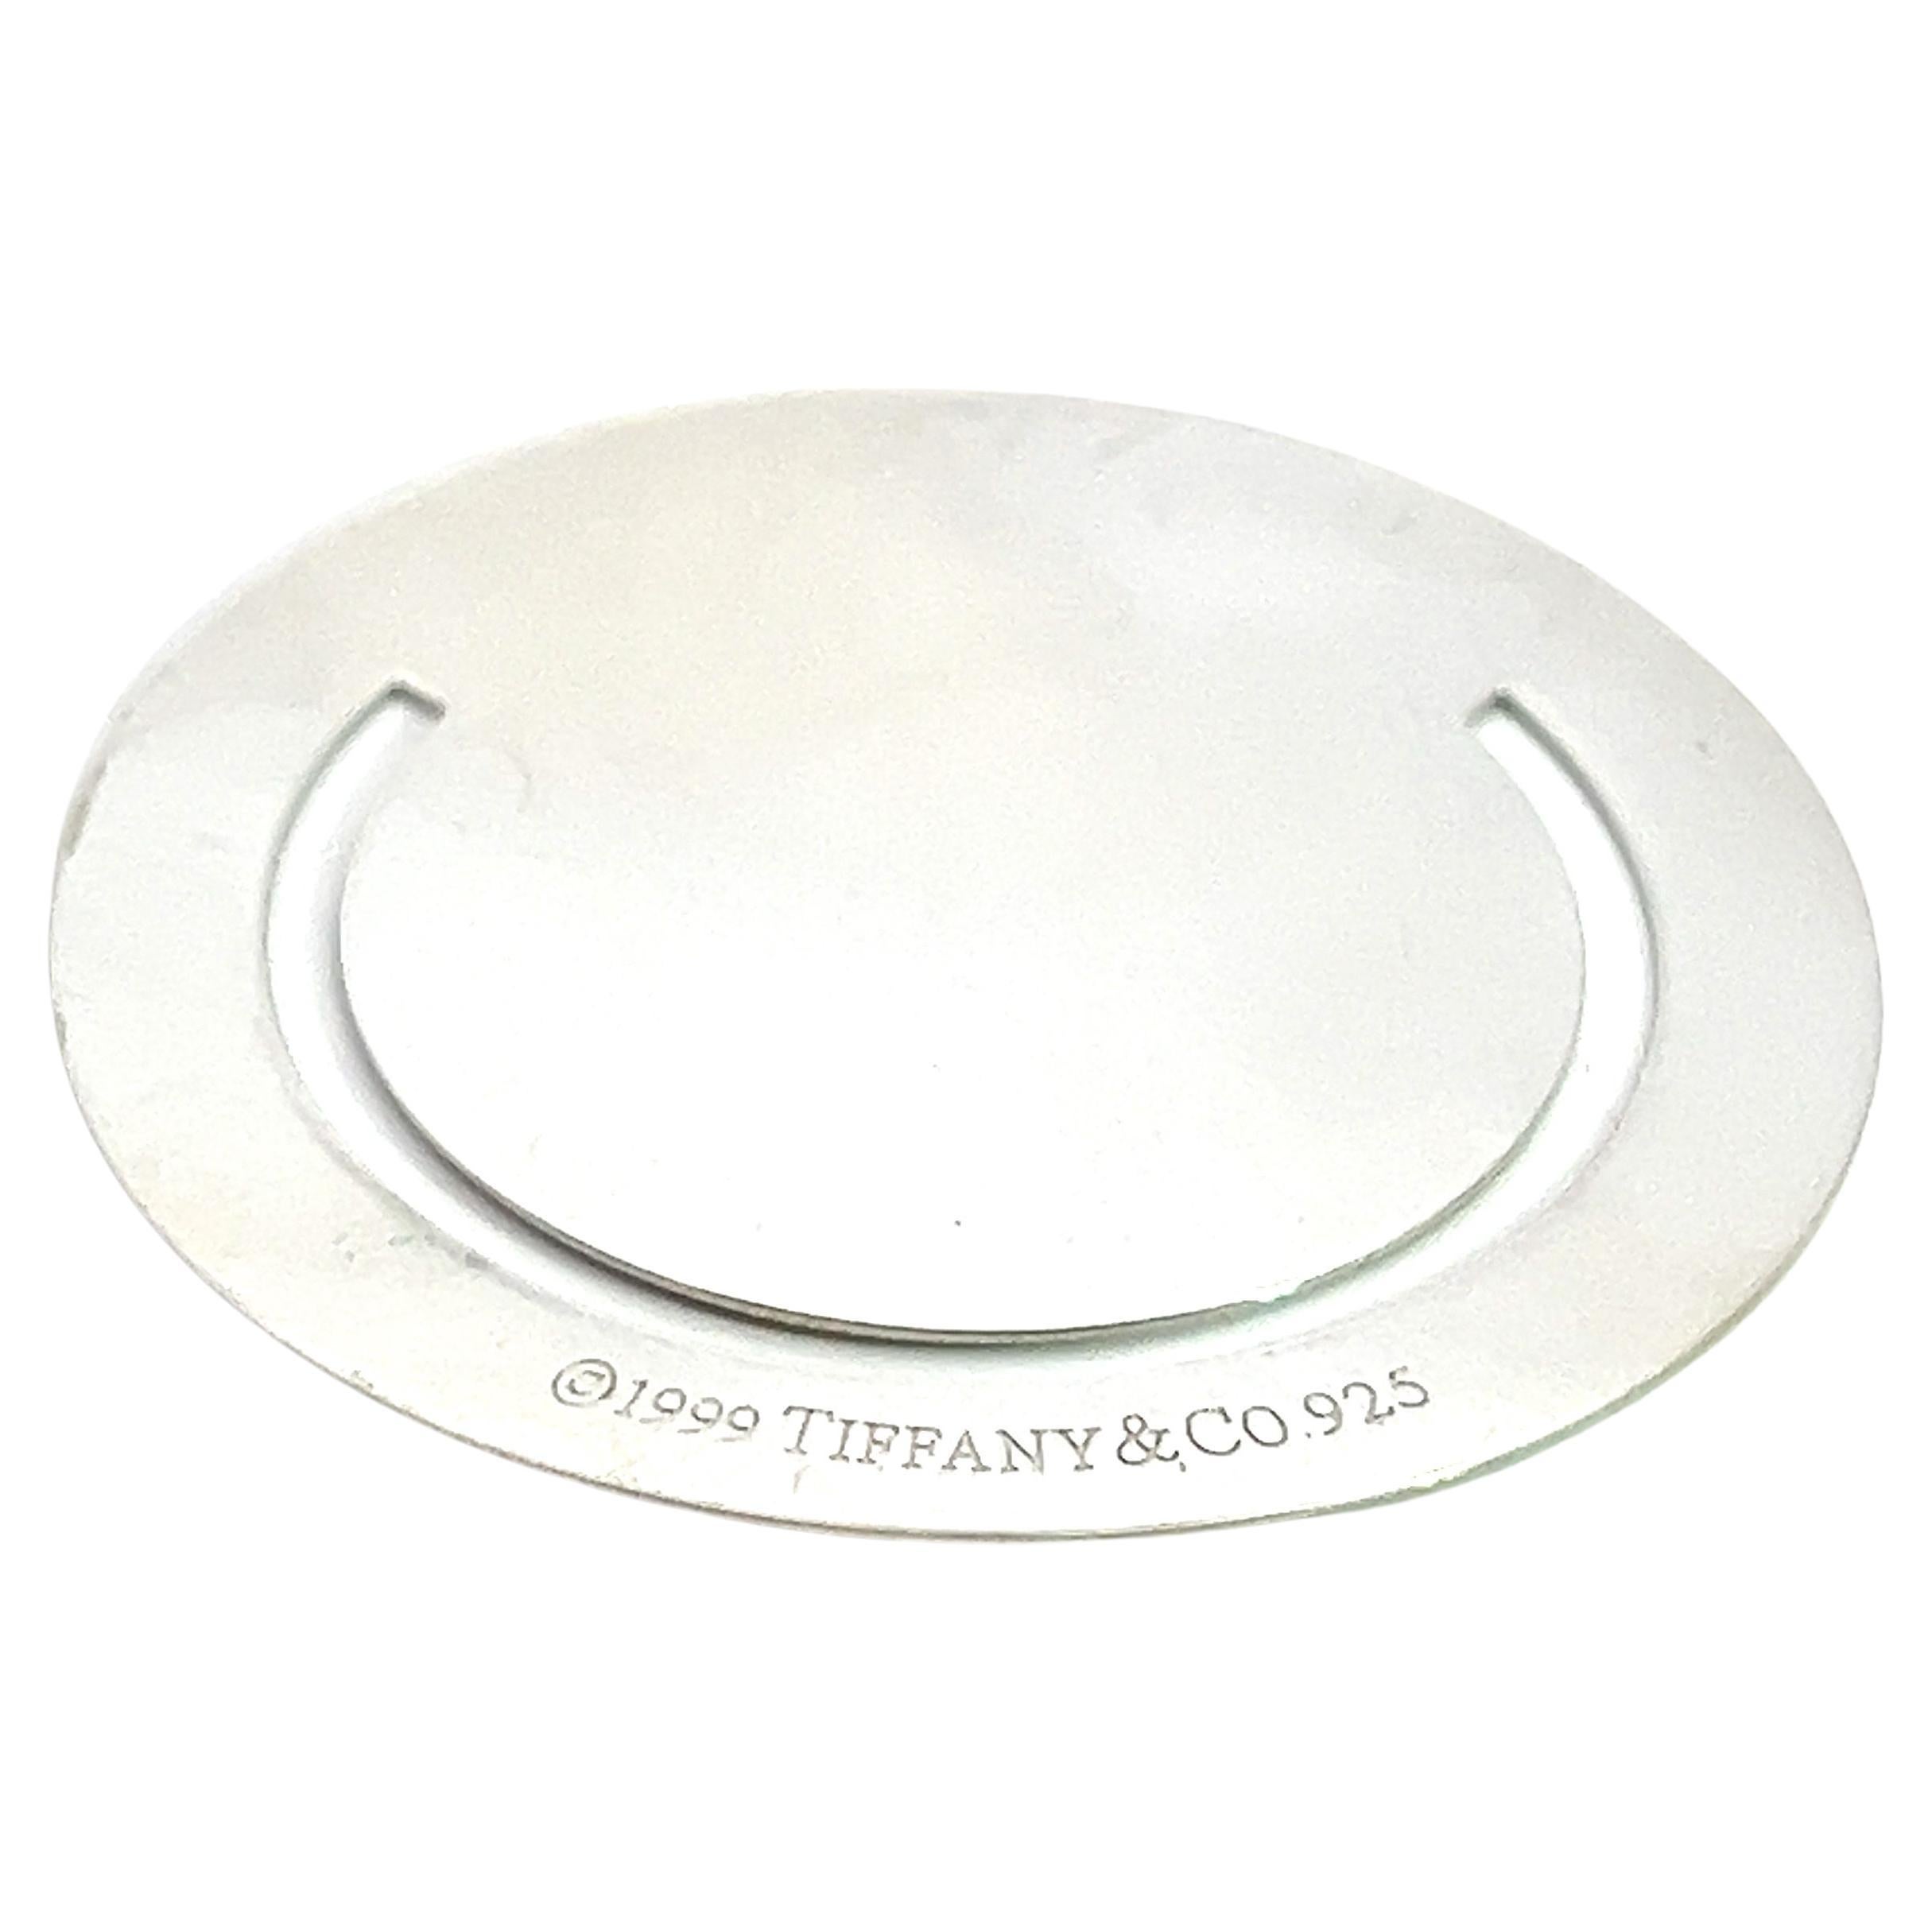 Tiffany & Co Estate Lesezeichen Sterling Silber 